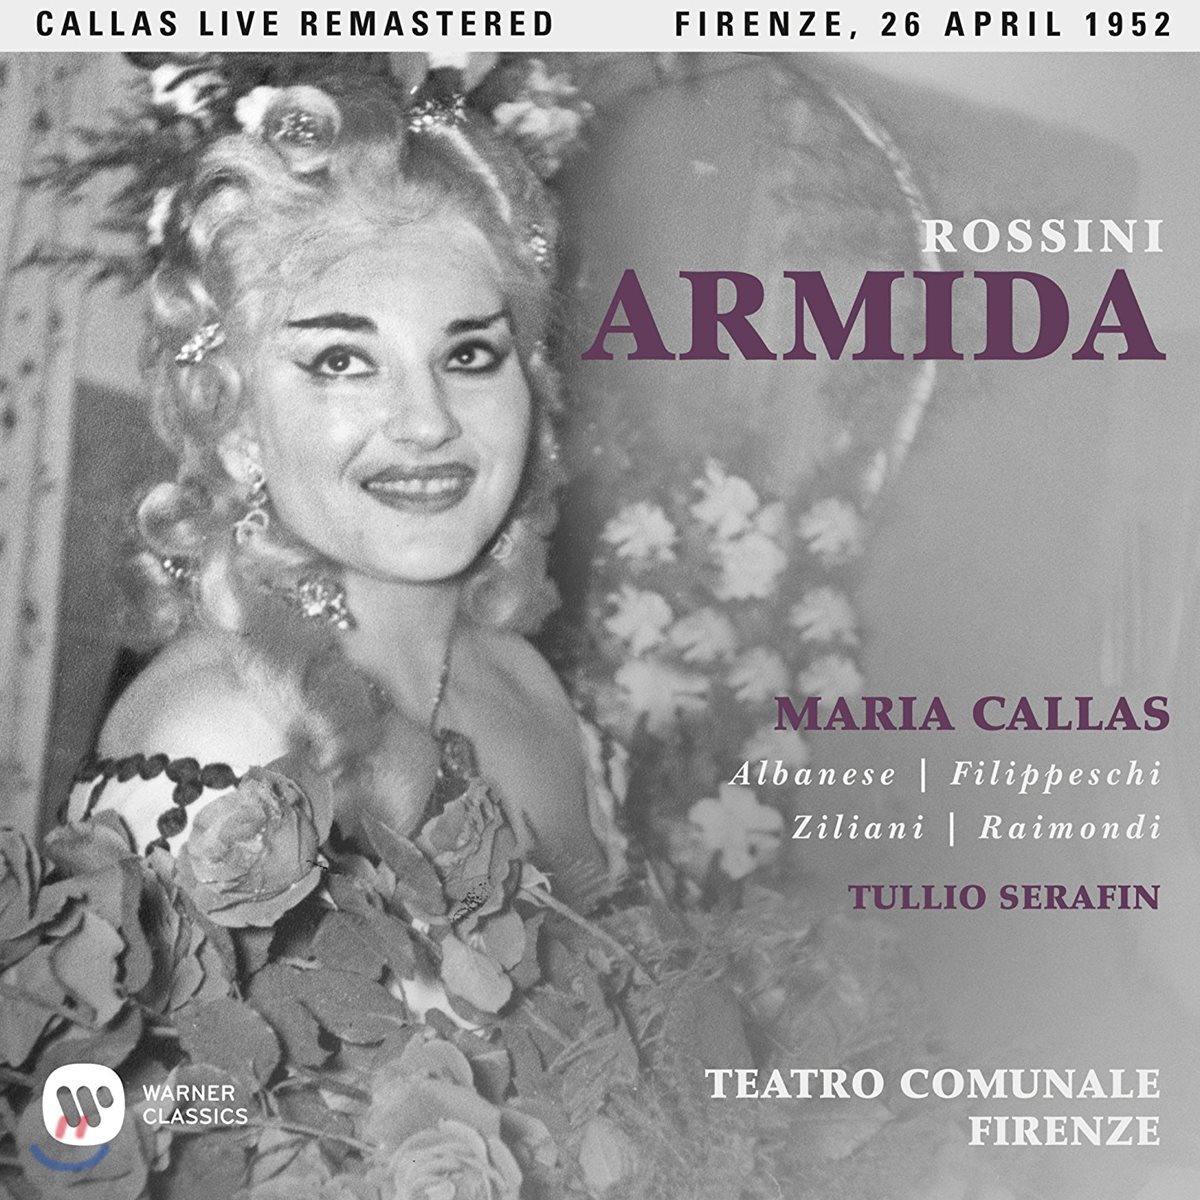 Maria Callas / Tullio Serafin 로시니: 아르미다 - 마리아 칼라스, 툴리오 세라핀 / 1952년 피렌체 테아트로 코뮤날레 실황 (Rossini: Armida)